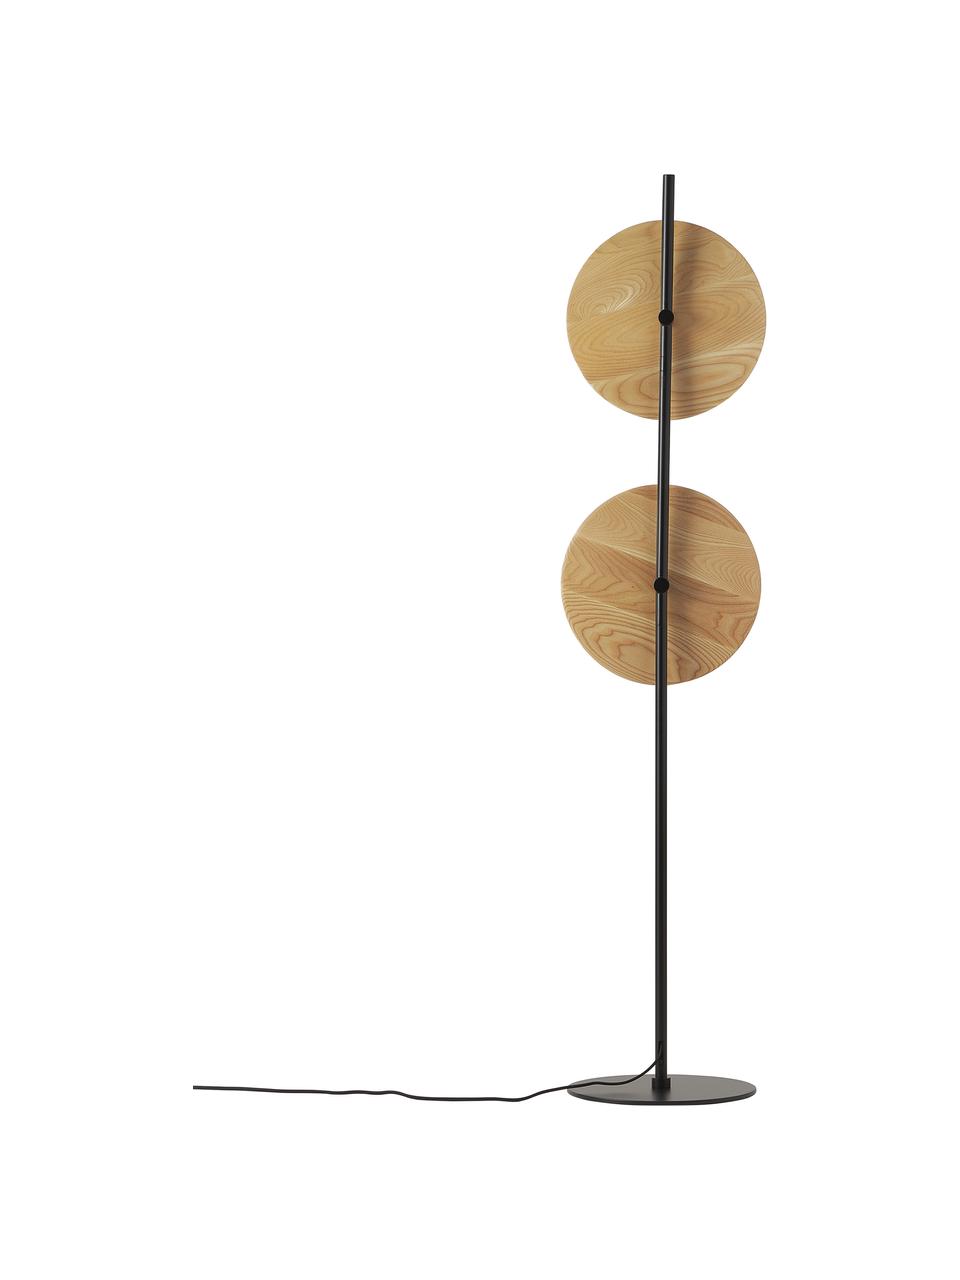 Verstellbare Stehlampe Kira aus Eschenholz, Dekor: 100 % Eschenholz, Schwarz, Helles Holz, Ø 9 x H 145 cm